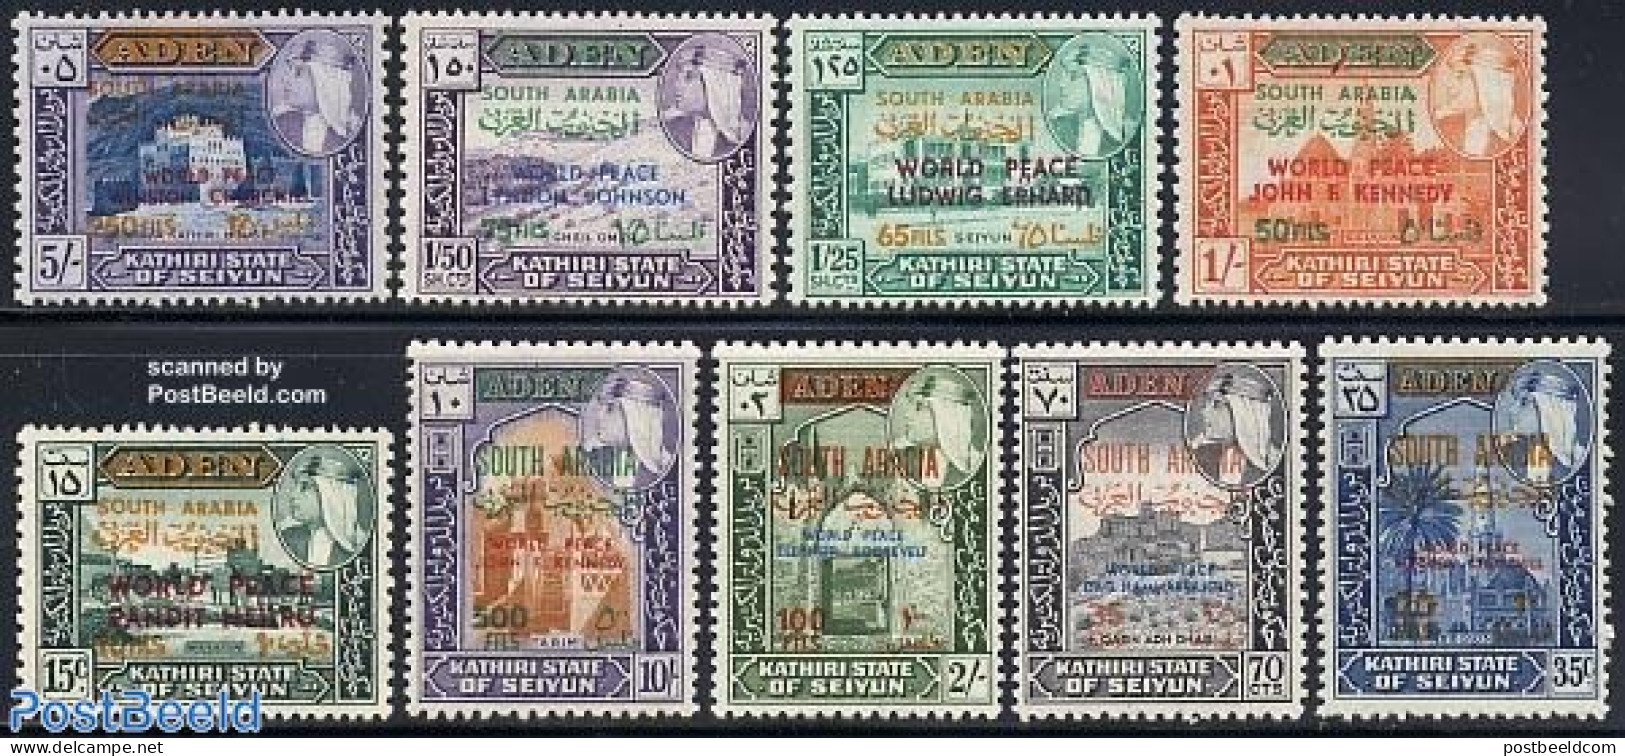 Aden 1967 Seiyun, World Peace Overprints 9v, Mint NH, Art - Castles & Fortifications - Castles